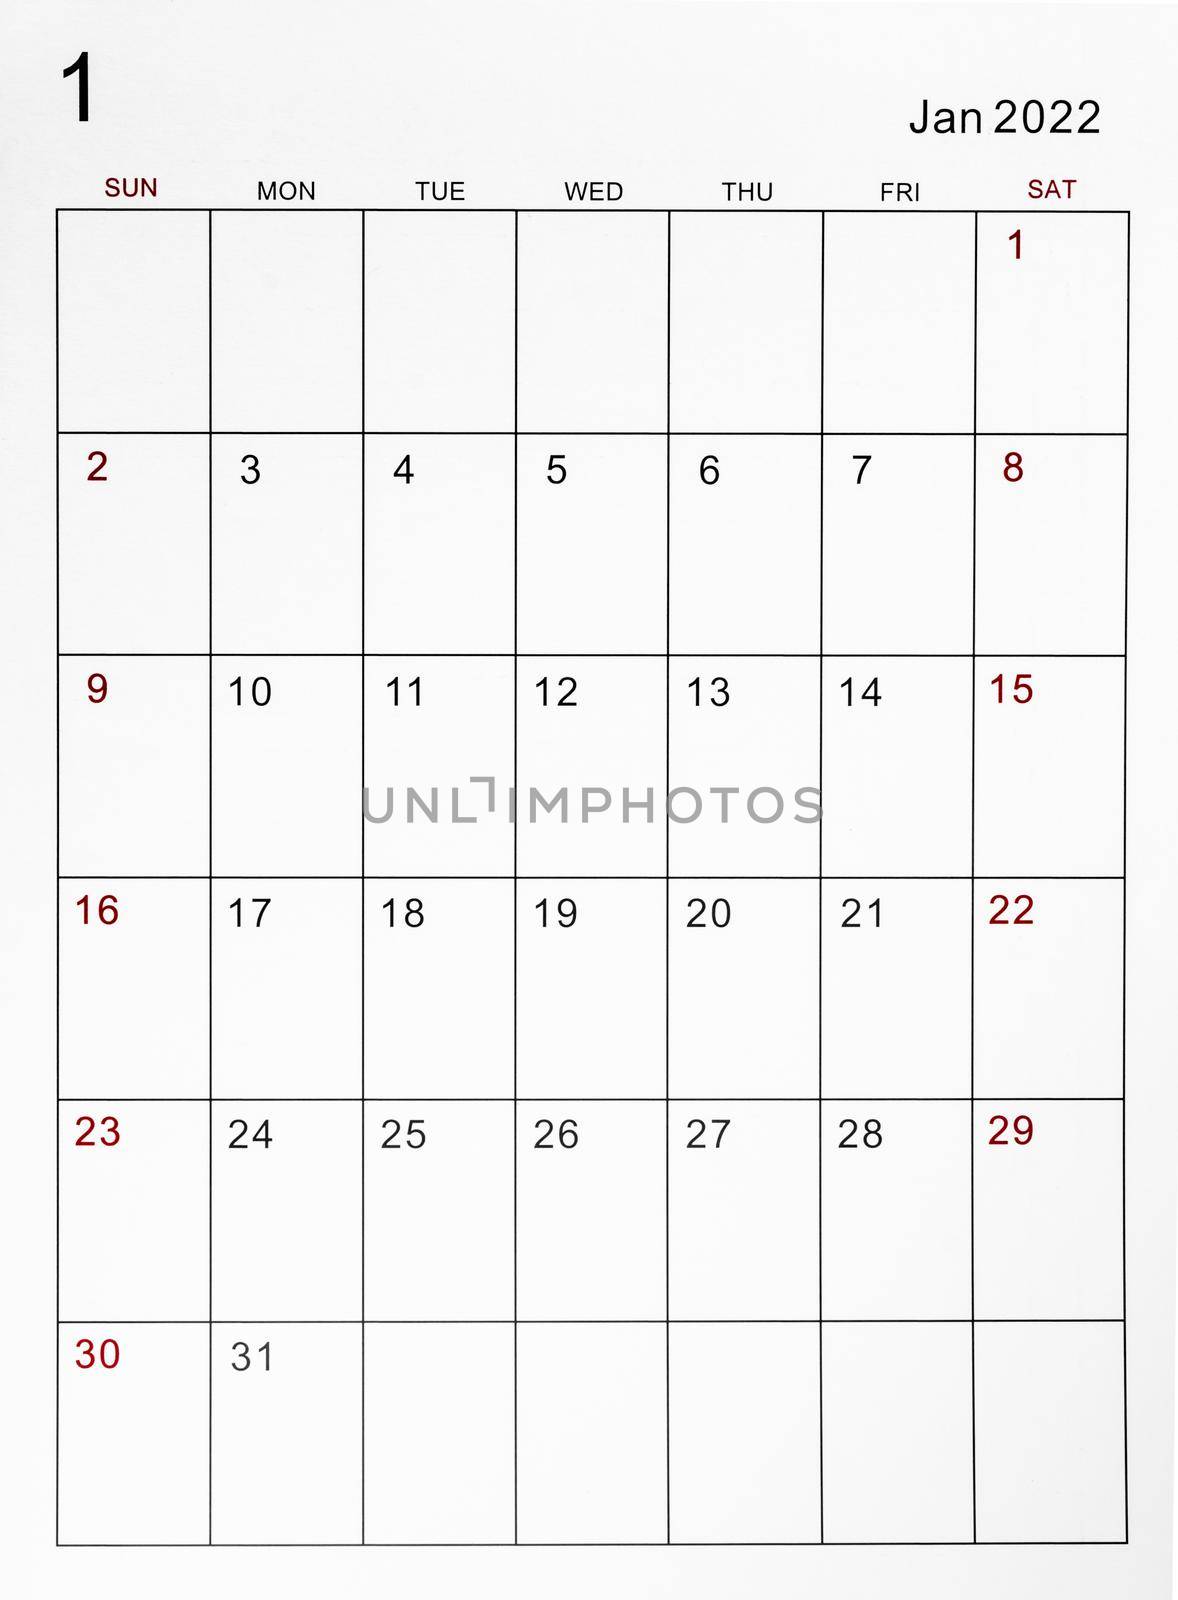 January 2022 calendar template. by Gamjai